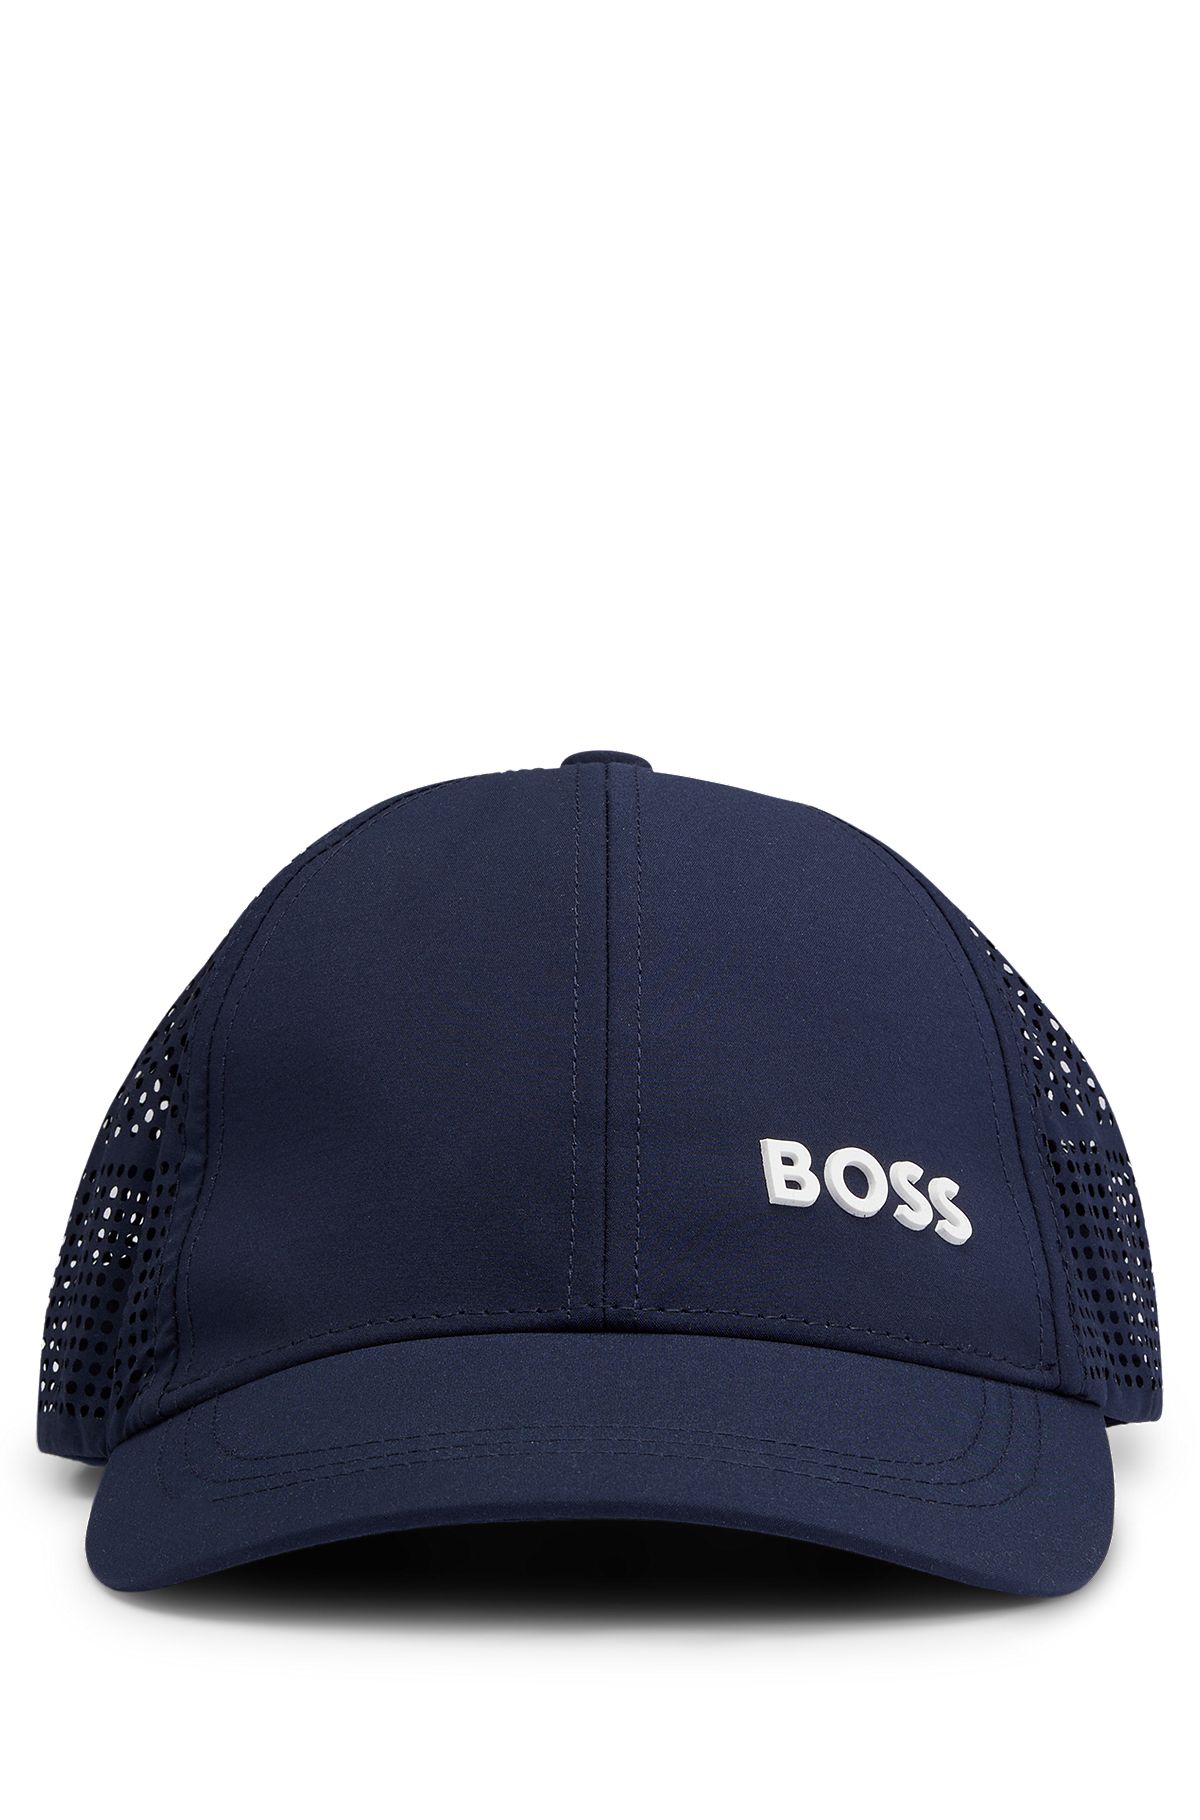 Kids' cap with logo and laser-cut details, Dark Blue